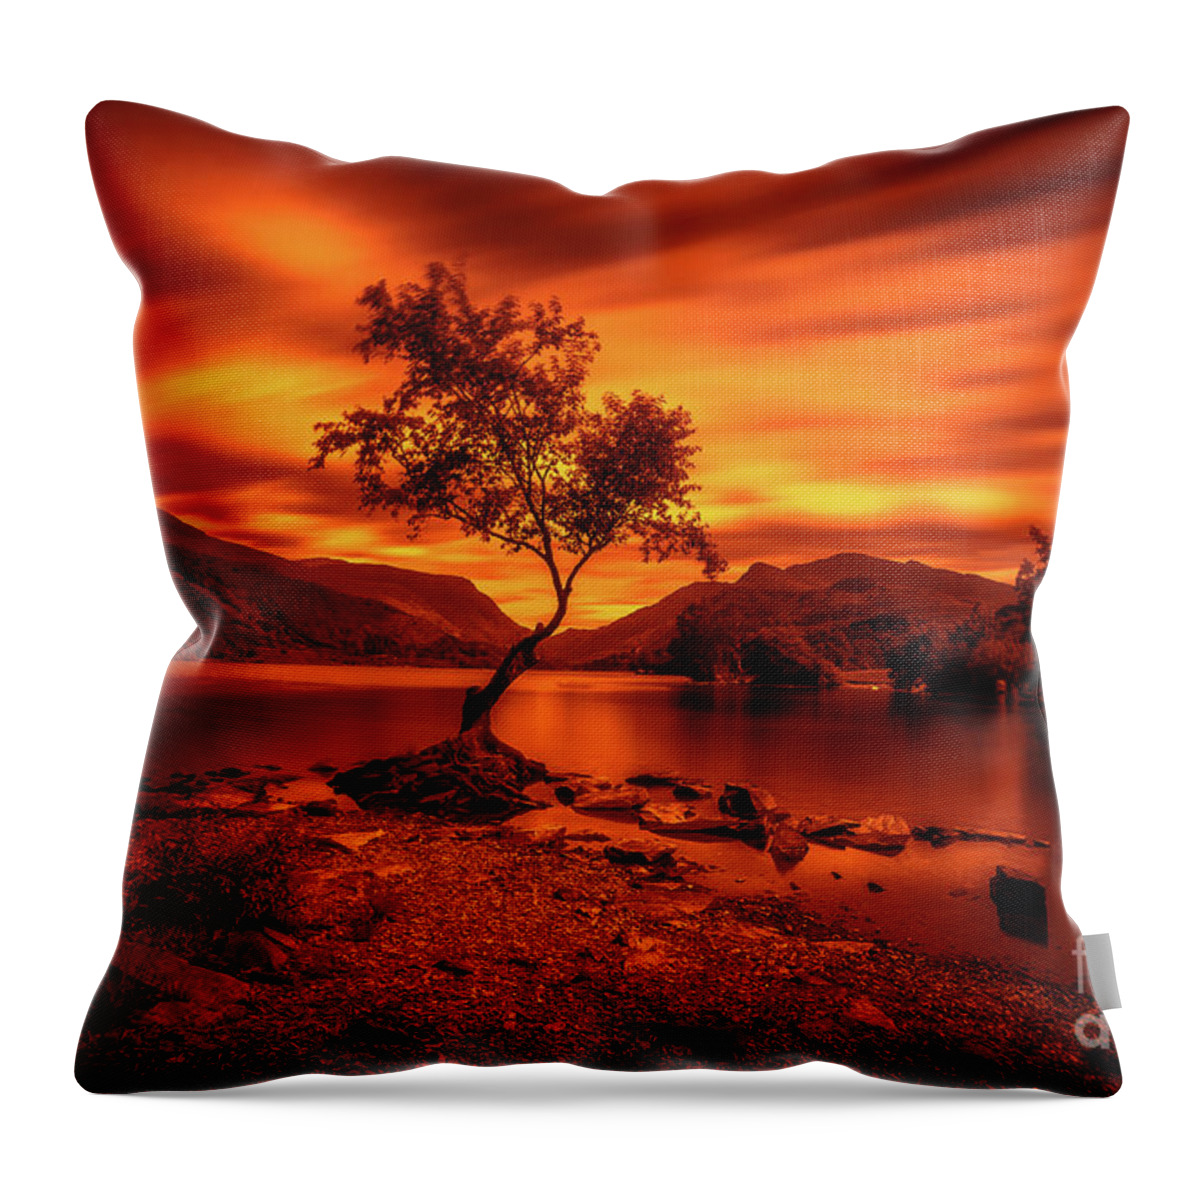 Llyn Padarn Throw Pillow featuring the photograph The lonely tree at Llyn Padarn lake - Part 3 by Mariusz Talarek